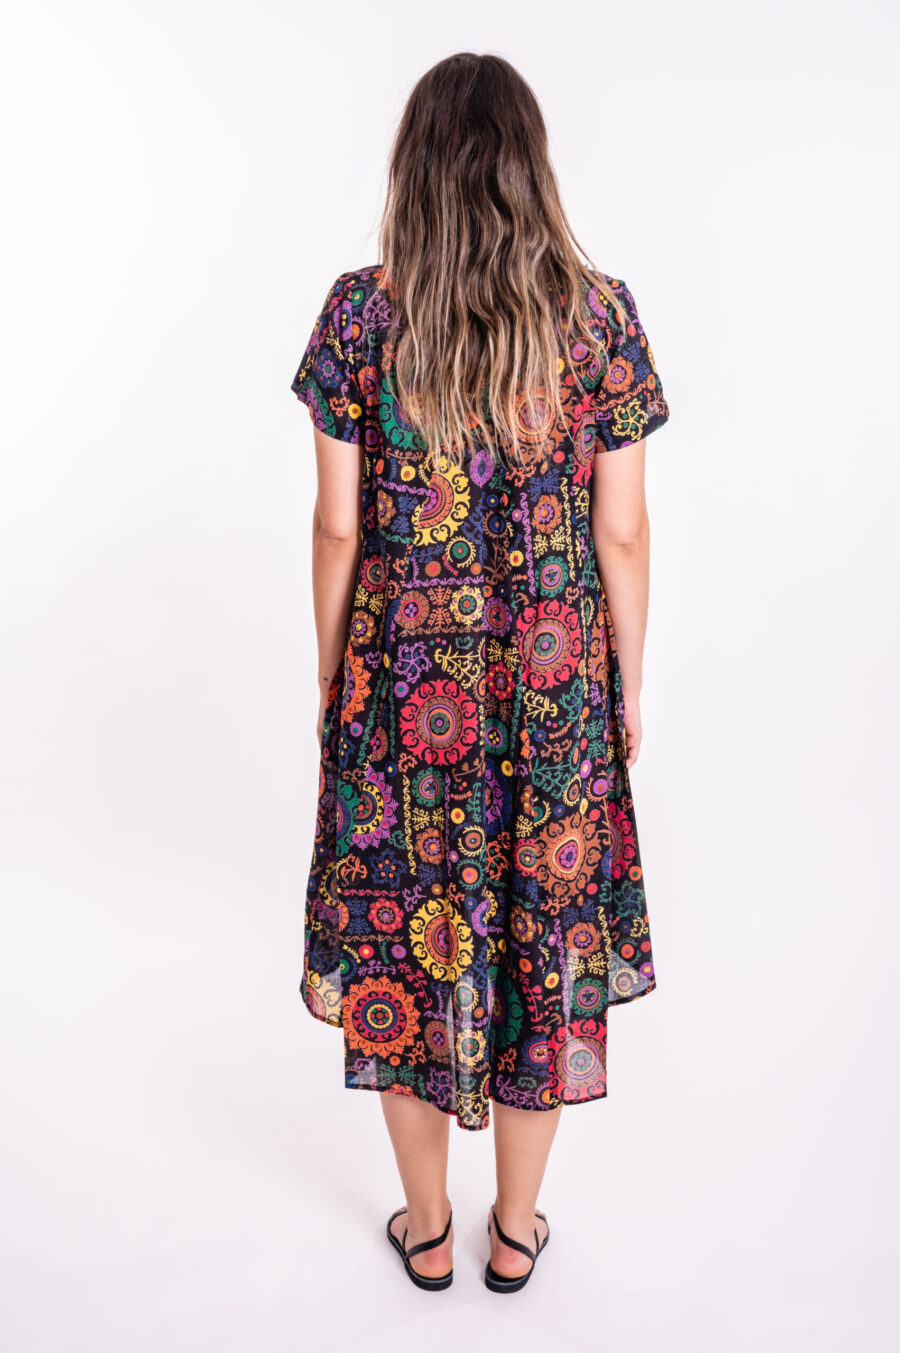 Aiya’le dress | Uniquely designed oversize dress - black dress with a colorful mandala print